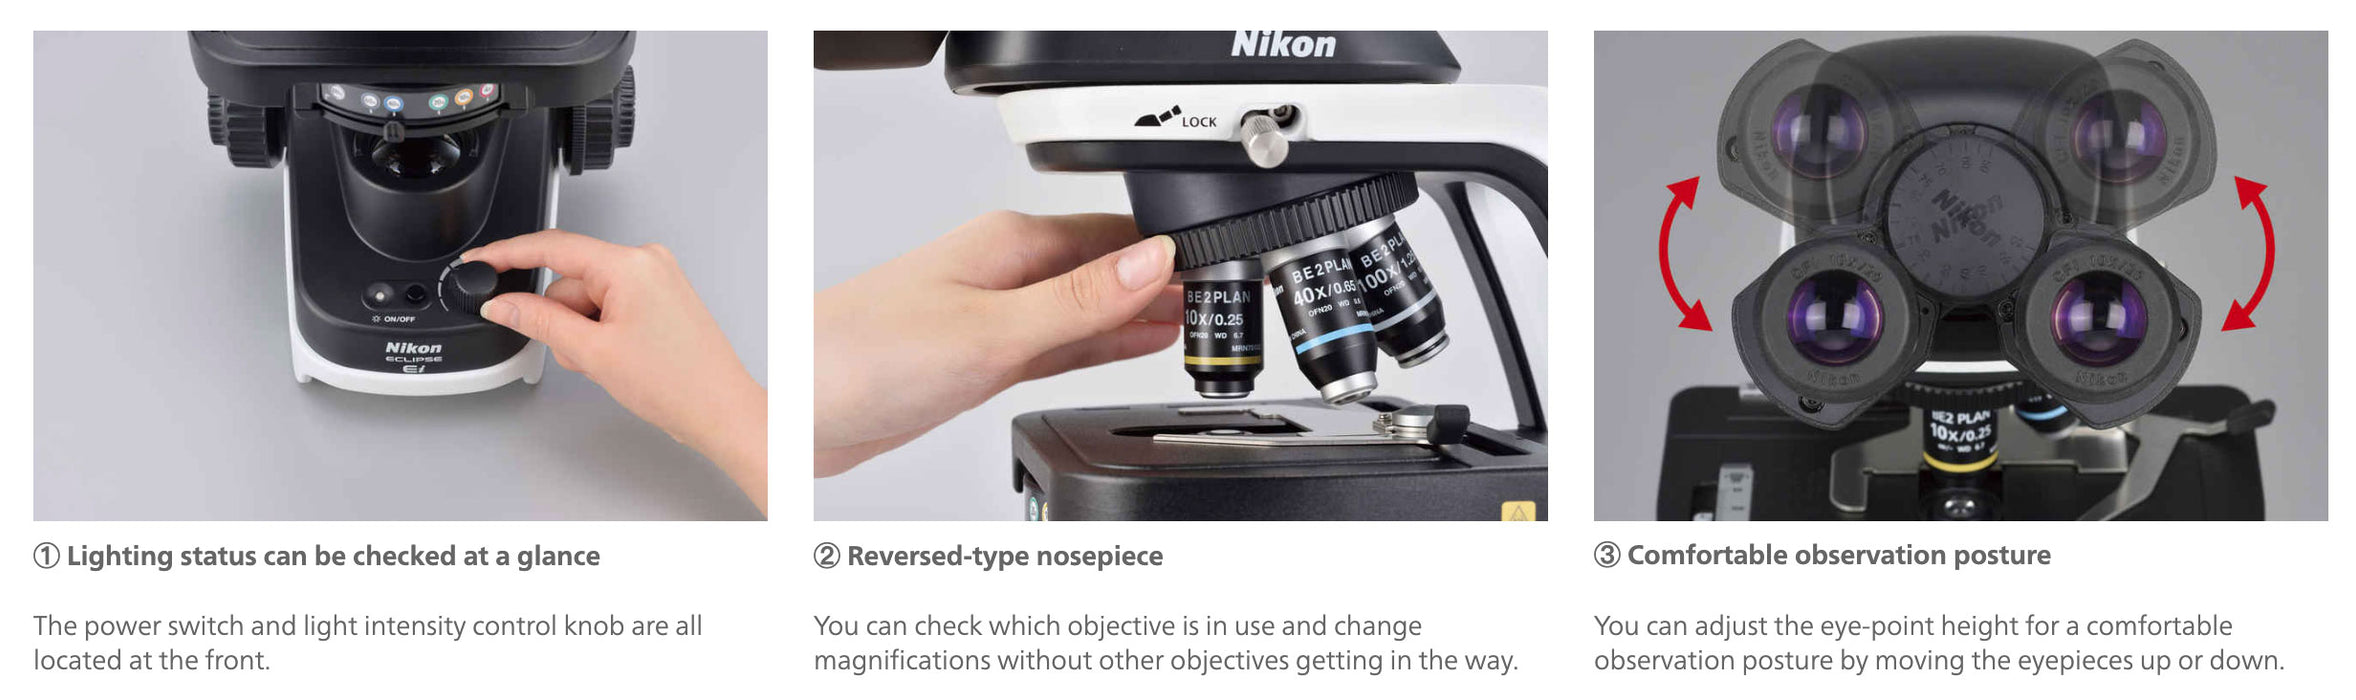 Nikon Eclipse Ei Binocular Microscope